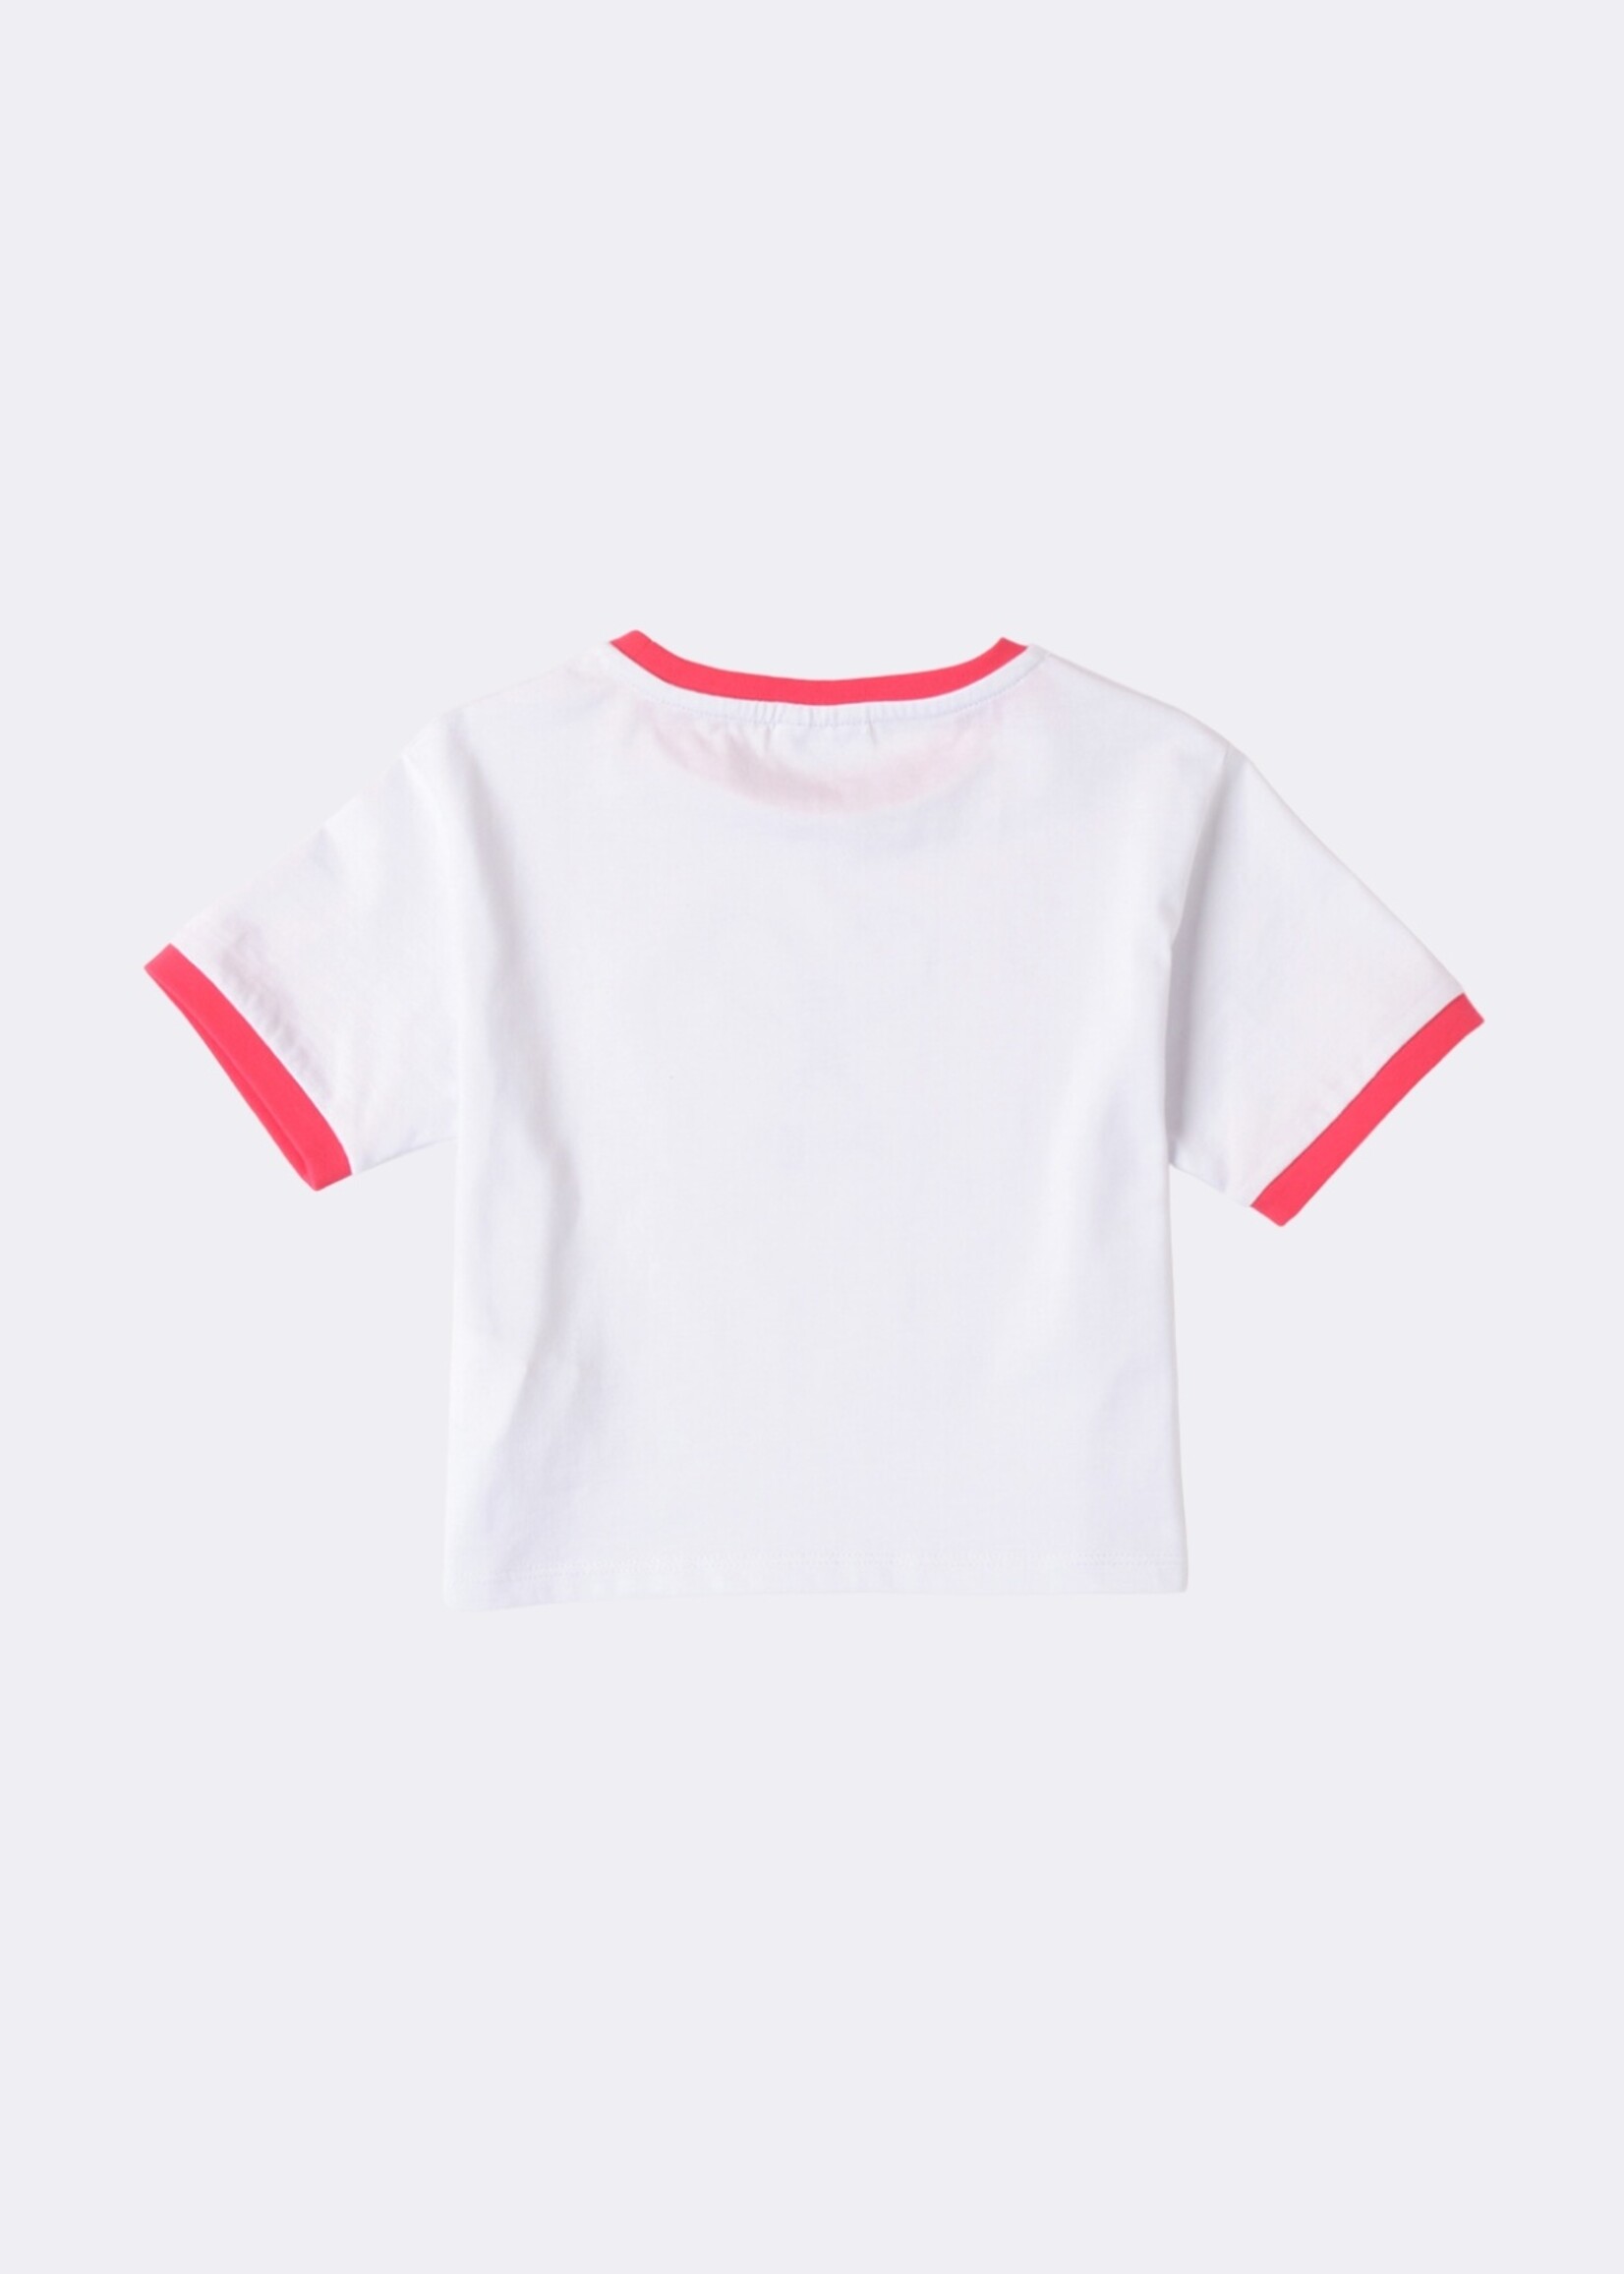 Superga White Tennis T-shirt